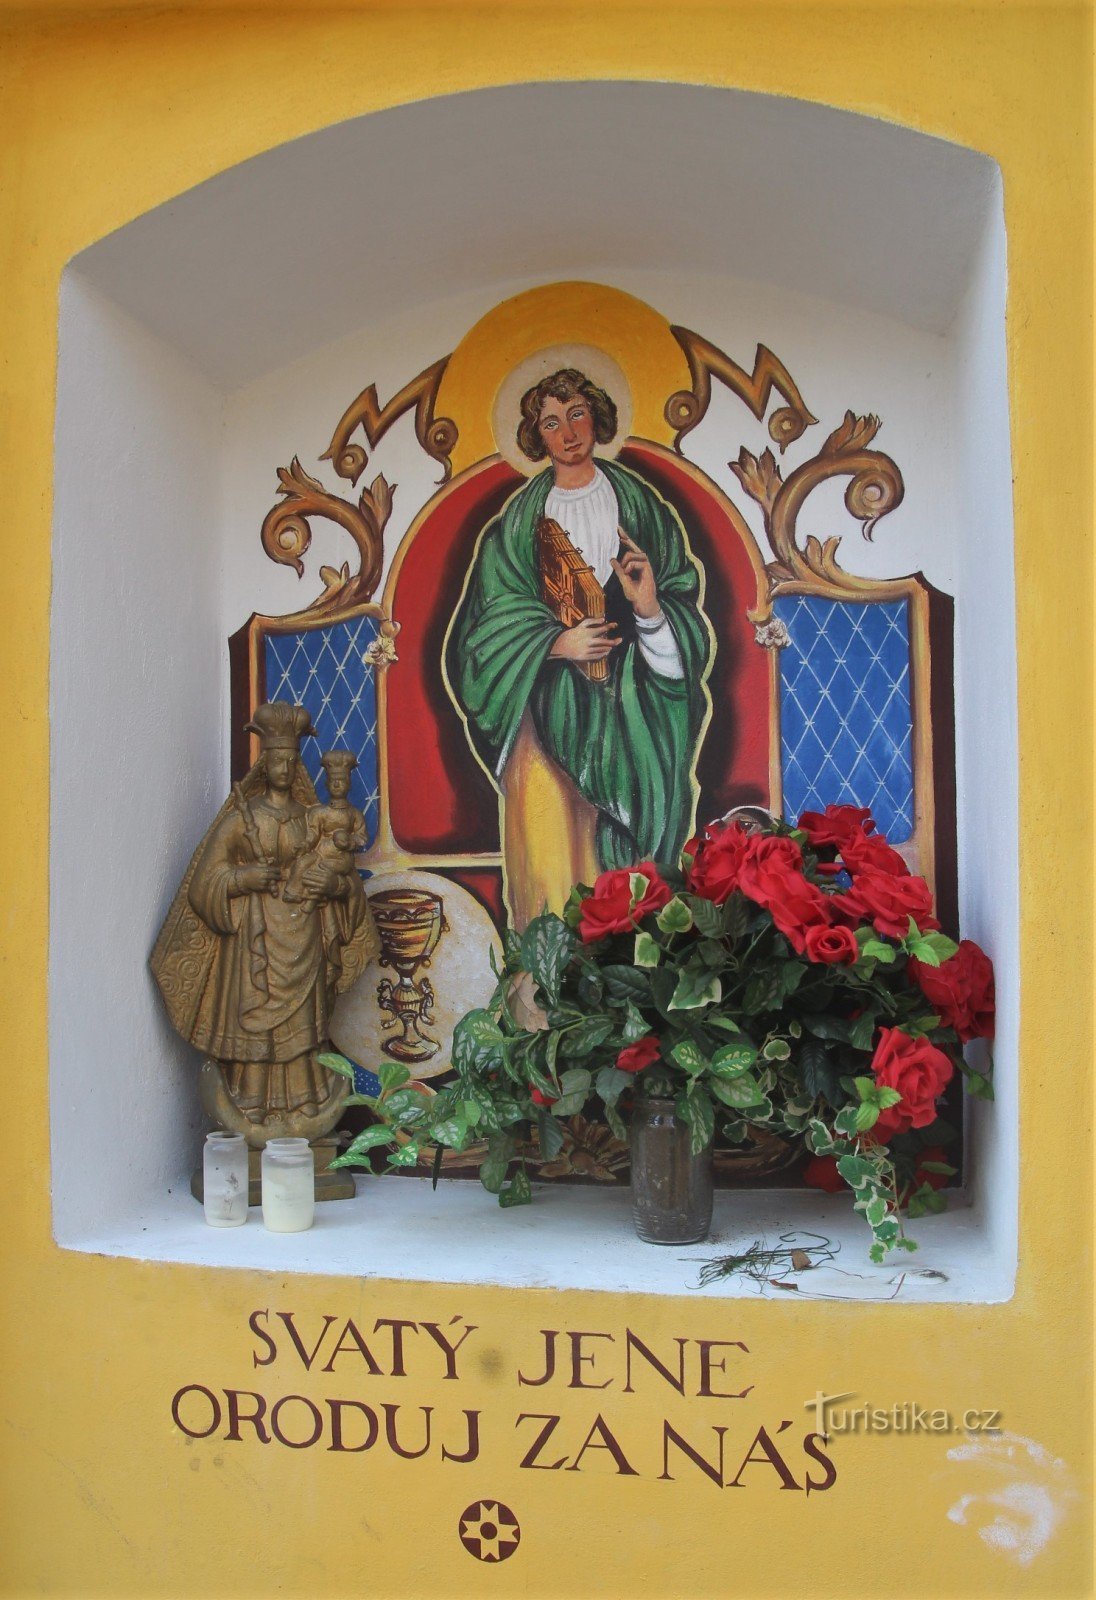 Motif St. John in the niche of the chapel